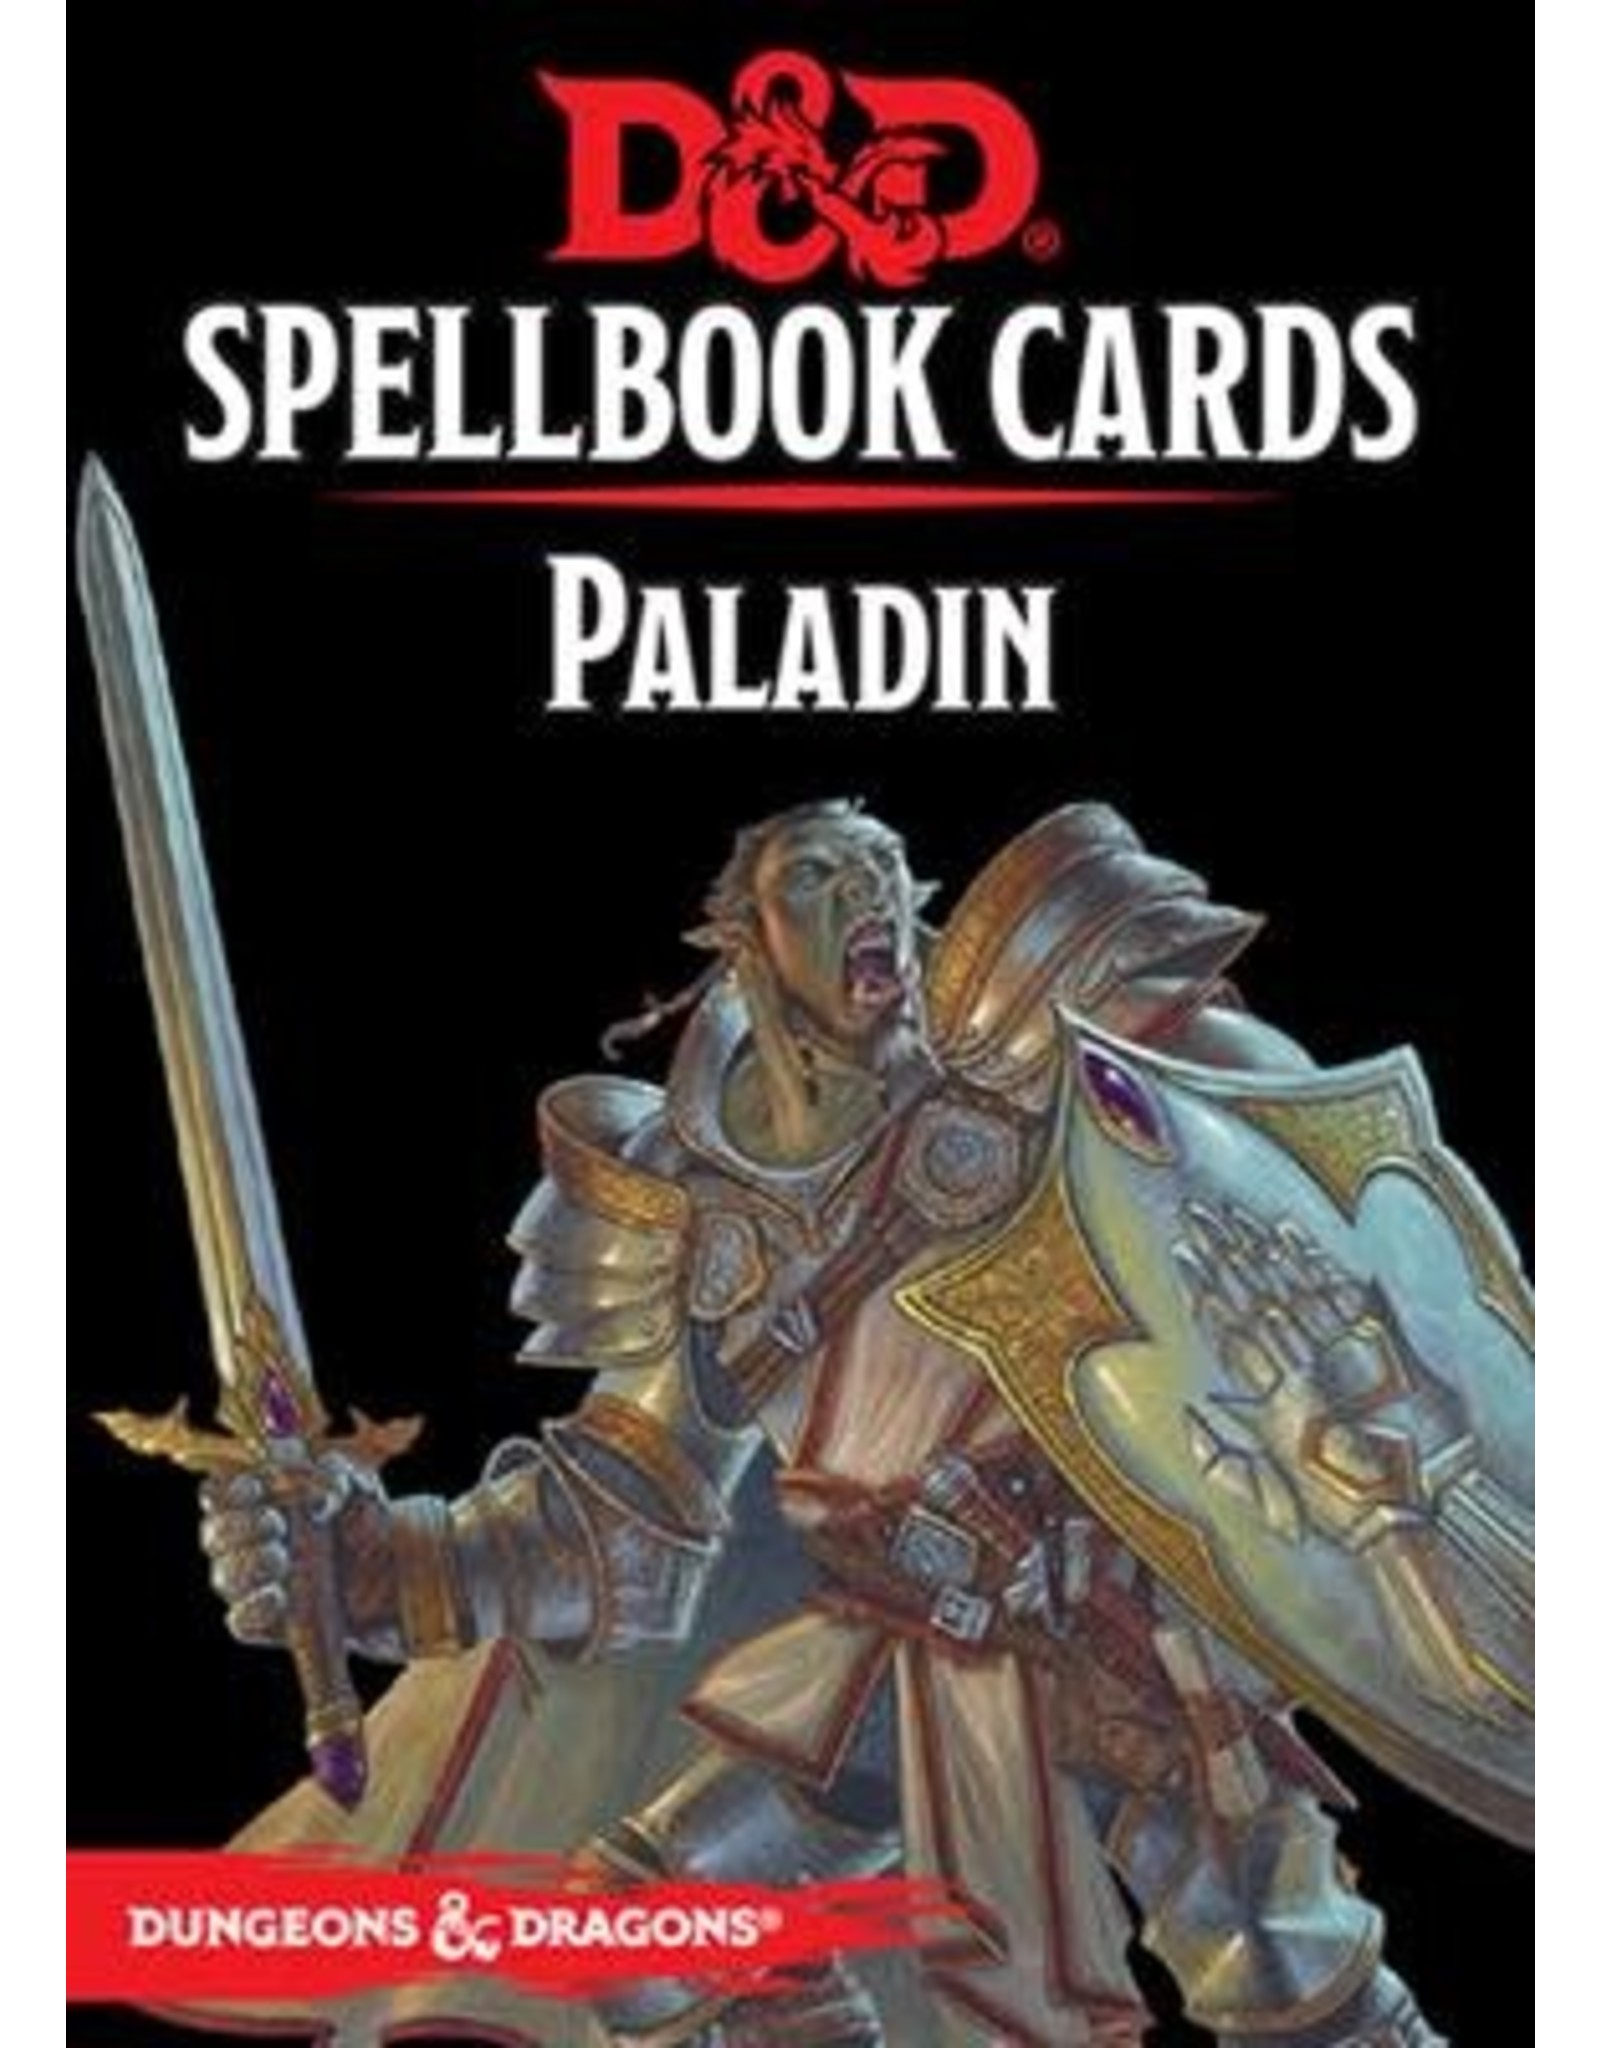 Spellbook Cards Paladin Deck Revised